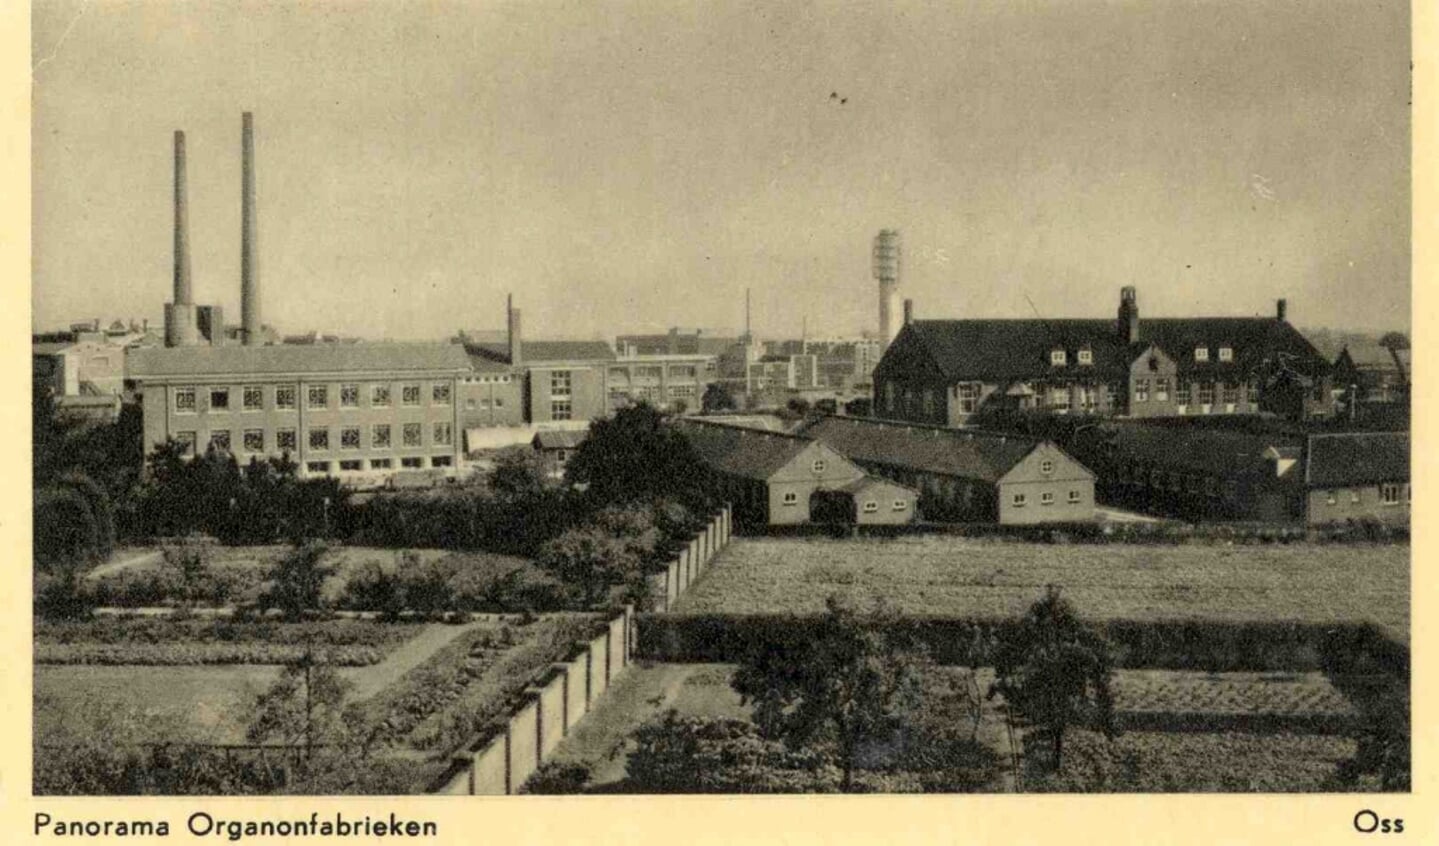 Ansichtkaart met panorama van Organon, 1960. 